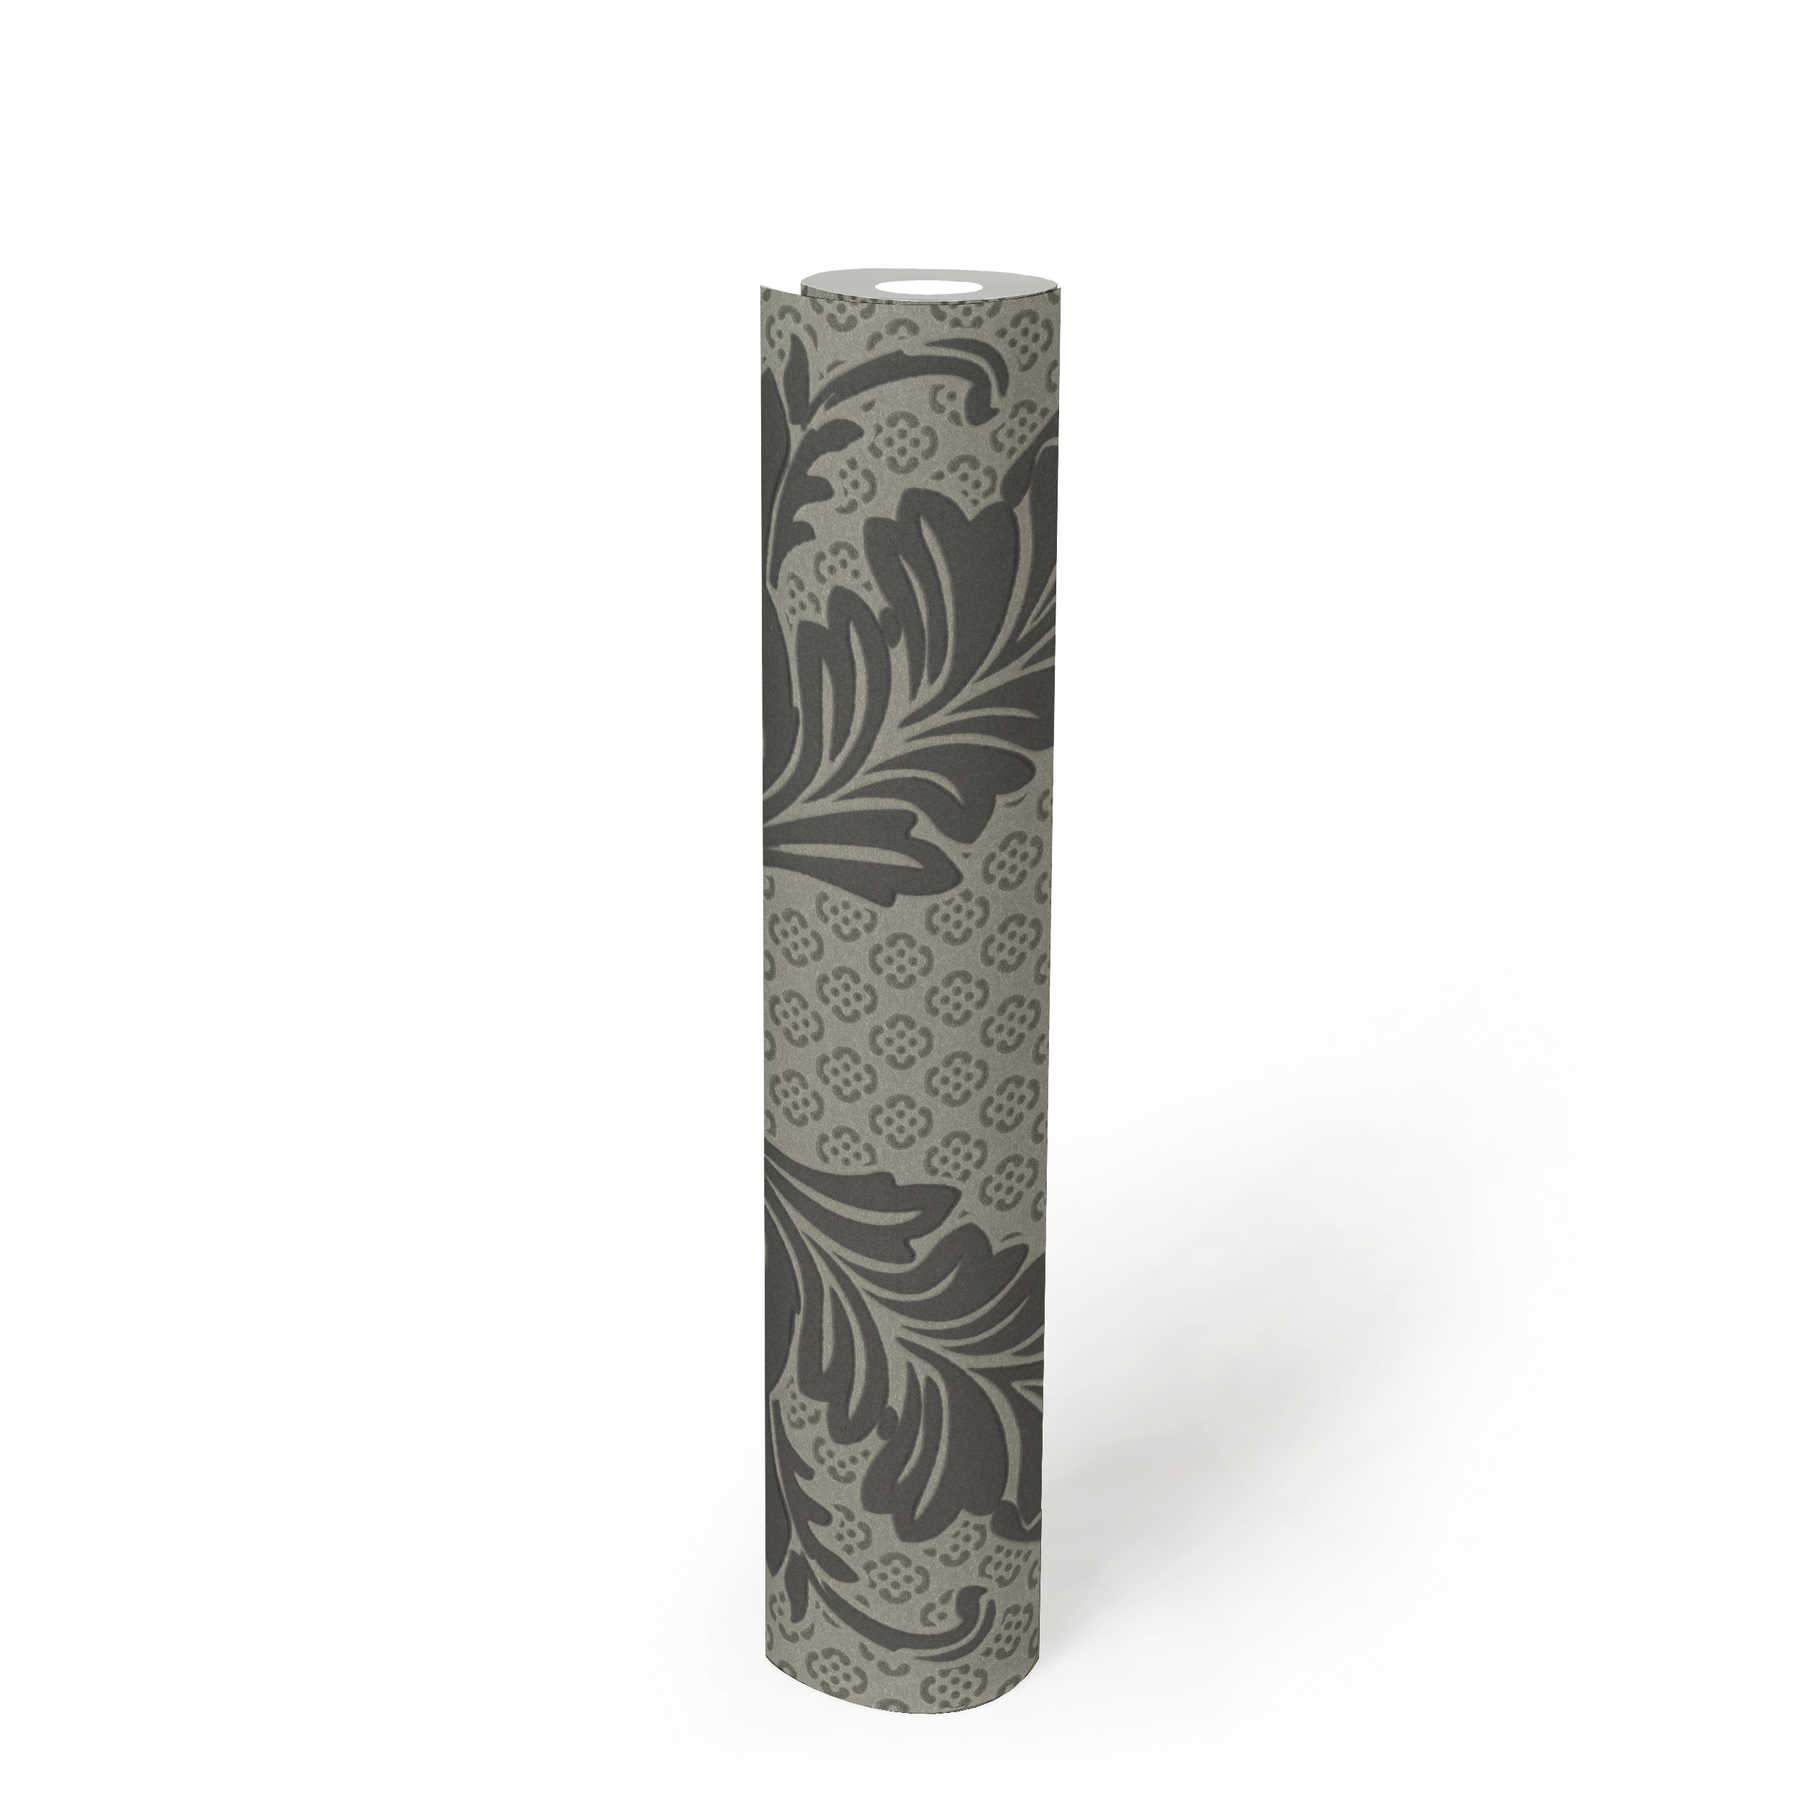             Gemusterte Ornamenttapete mit großem Floralen Motiv – Grau, Bronze
        